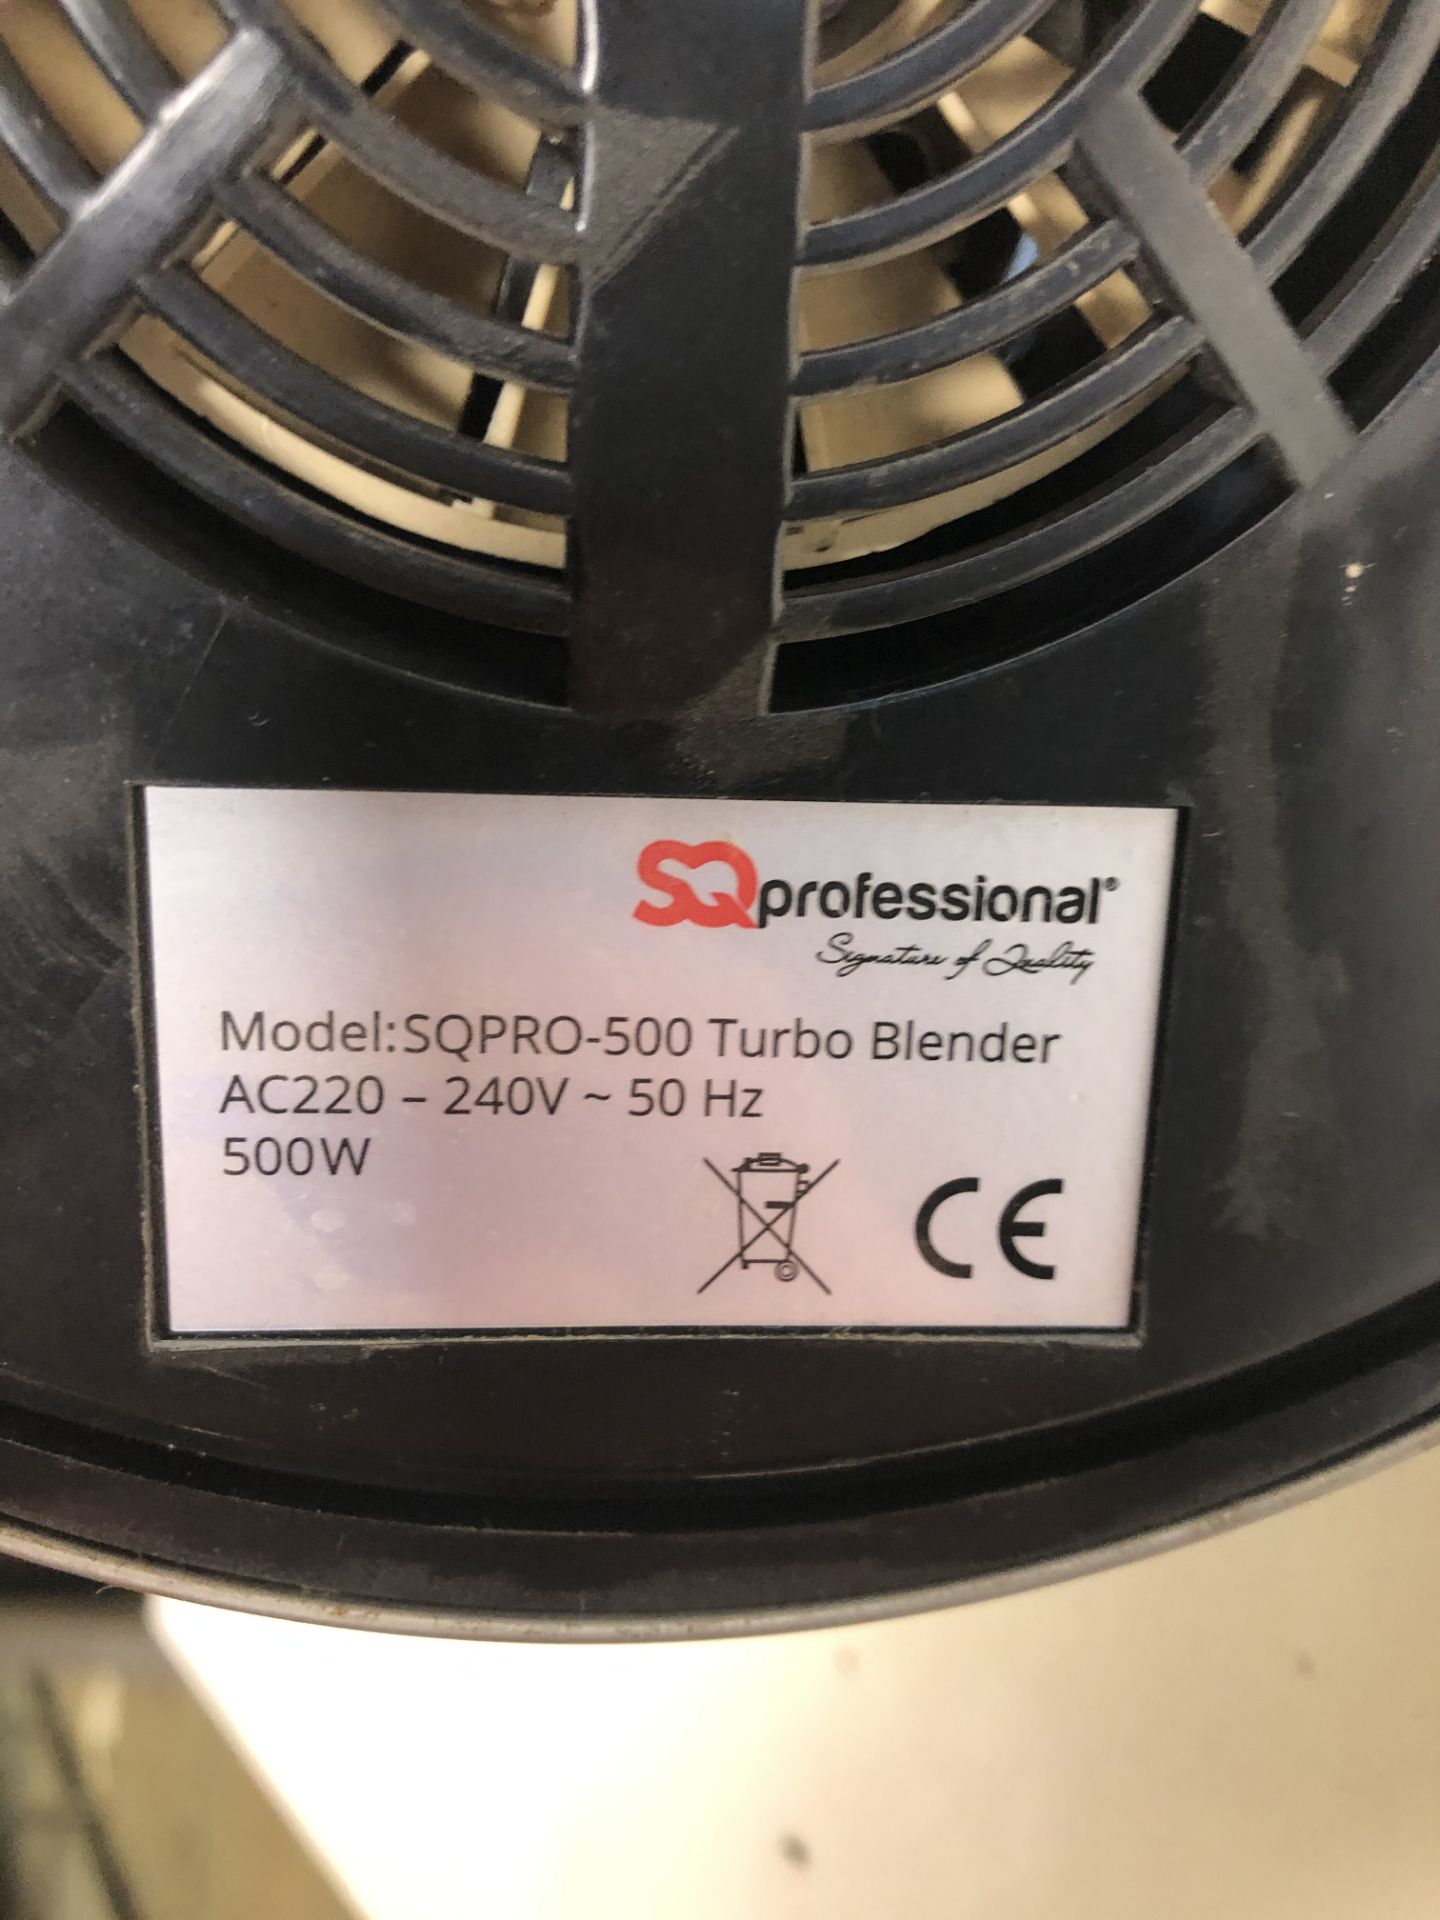 SQ Professional SQPRO-500 1.5L Turbo Blender - Image 3 of 3